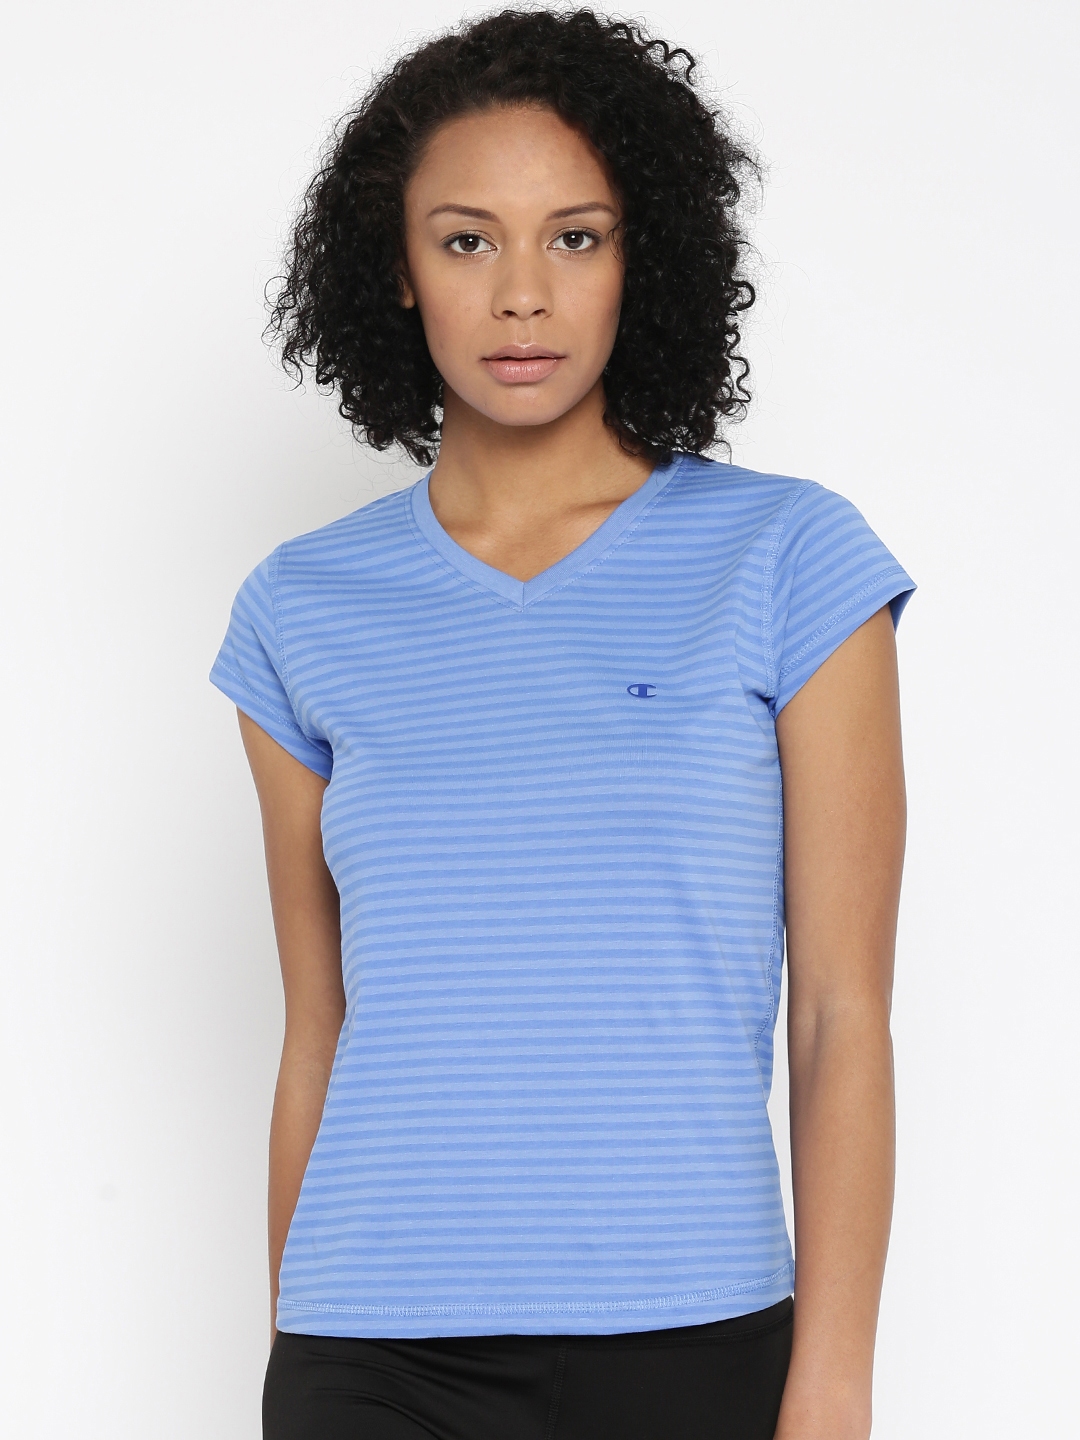 Champion Women V-Neck Cotton Turquoise Blue Shirt Size Medium RN 15763